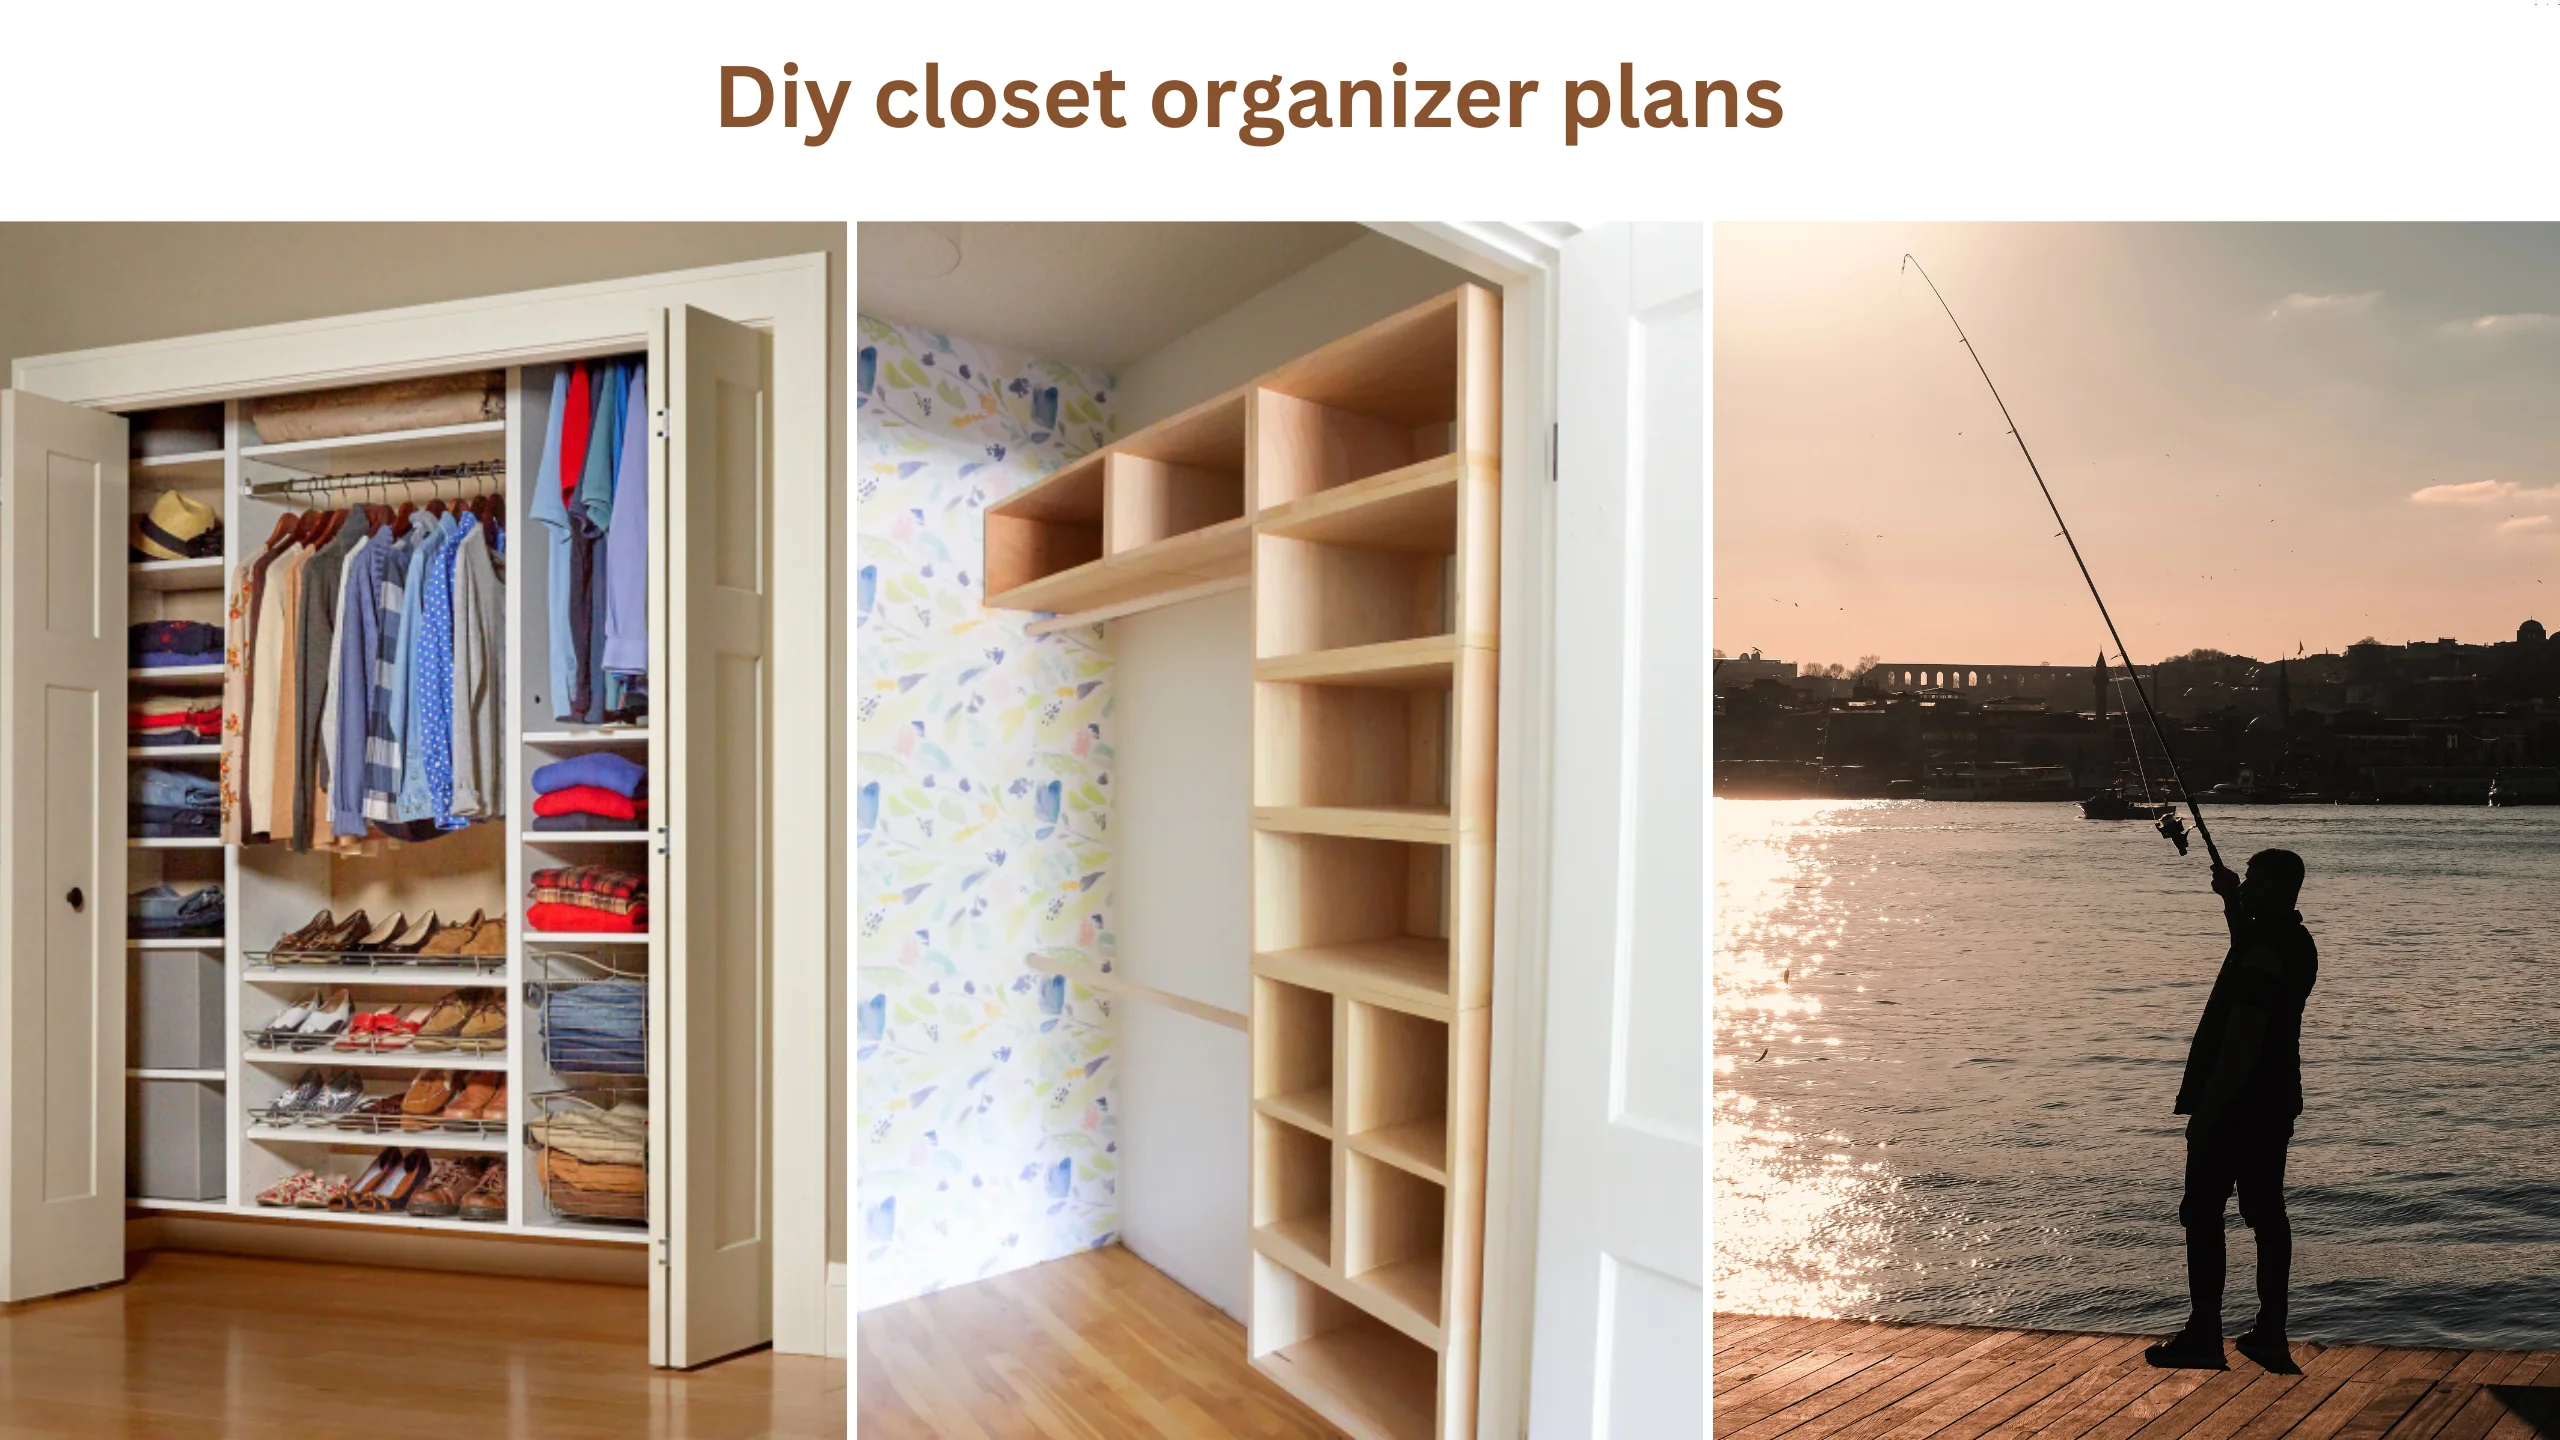 Diy closet organizer plans